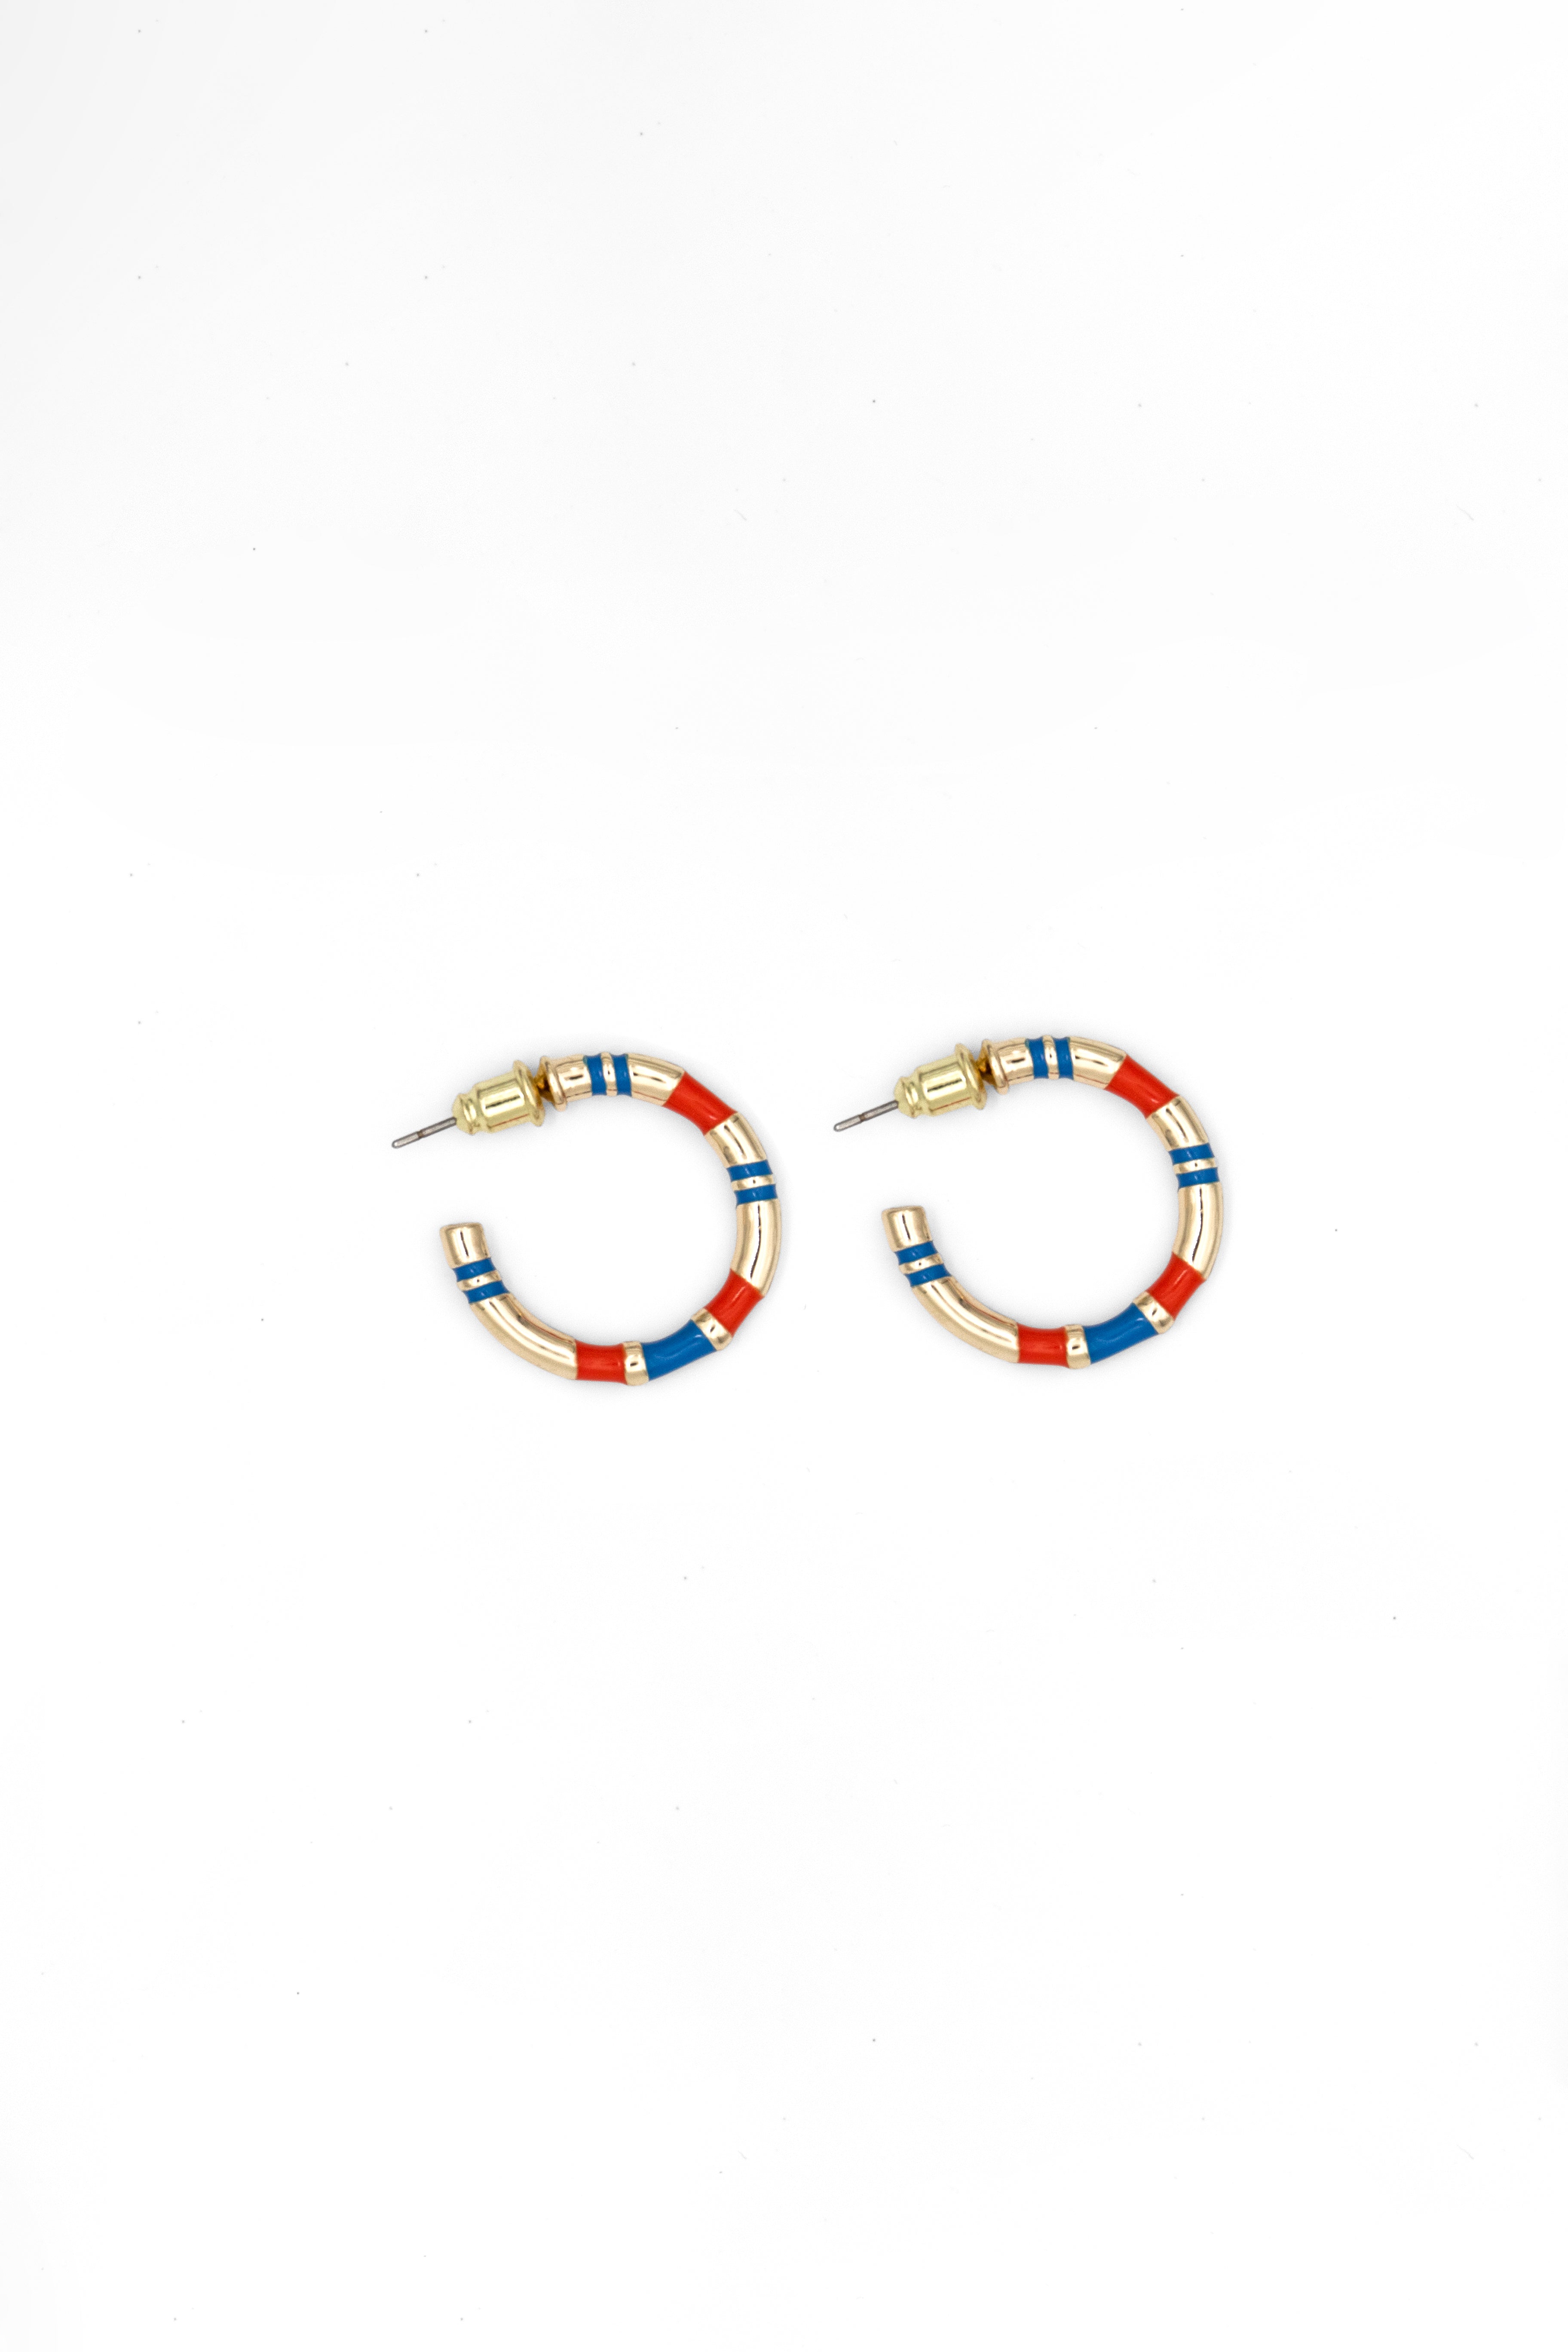 Cassidye Earrings / Blue-Red